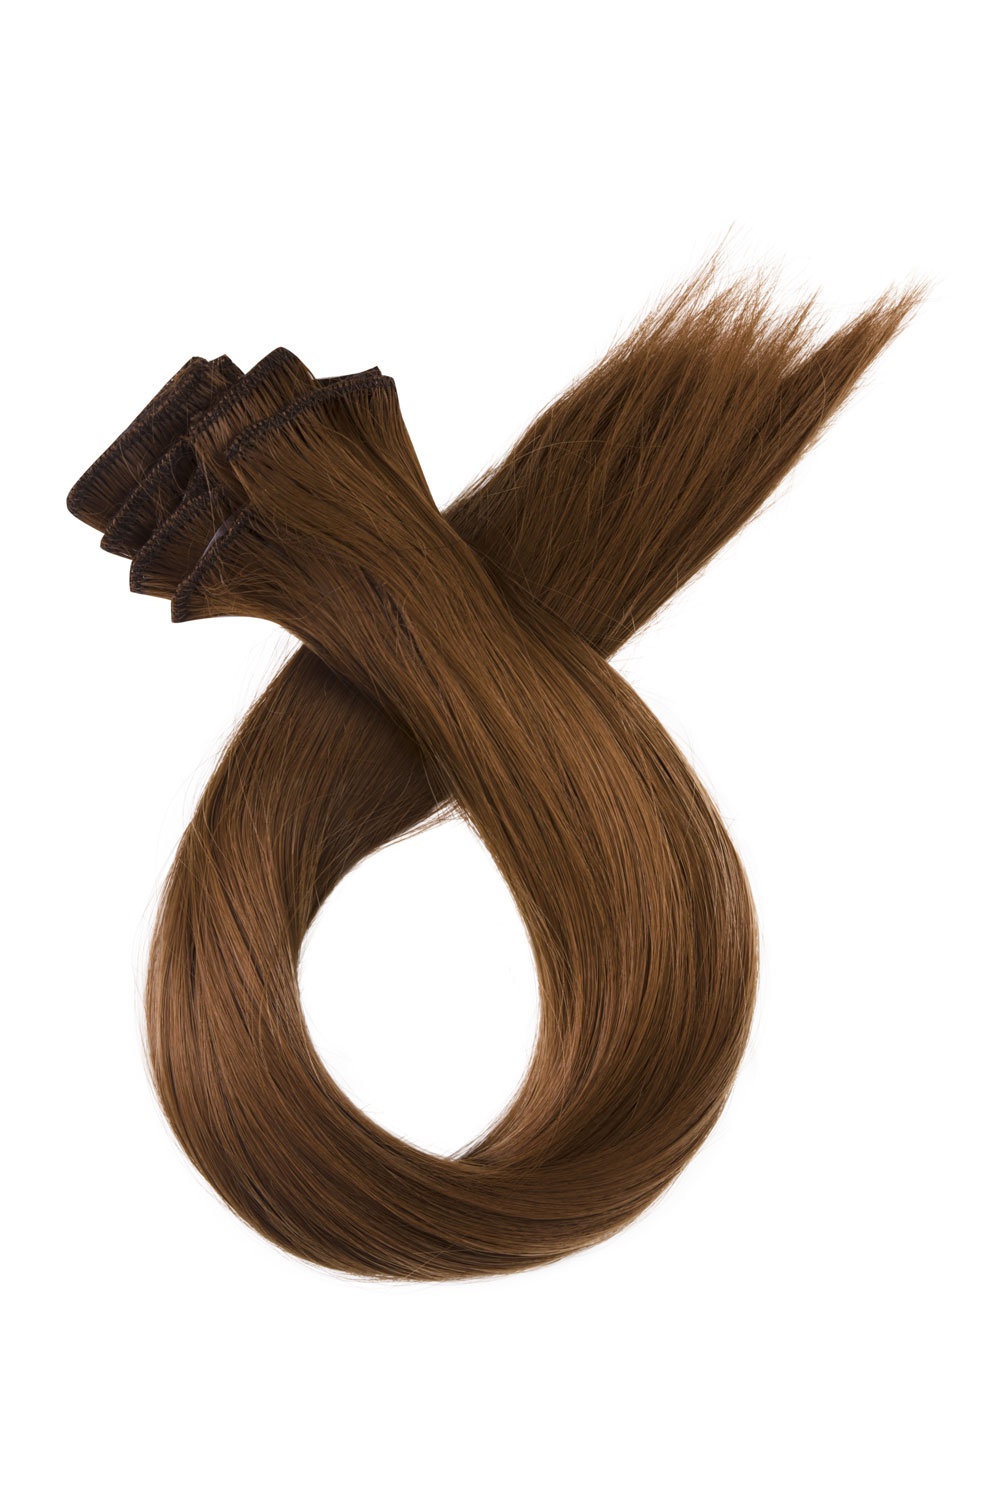 Svetlo hnedé clip in vlasy, 60cm, 150g, farba 12